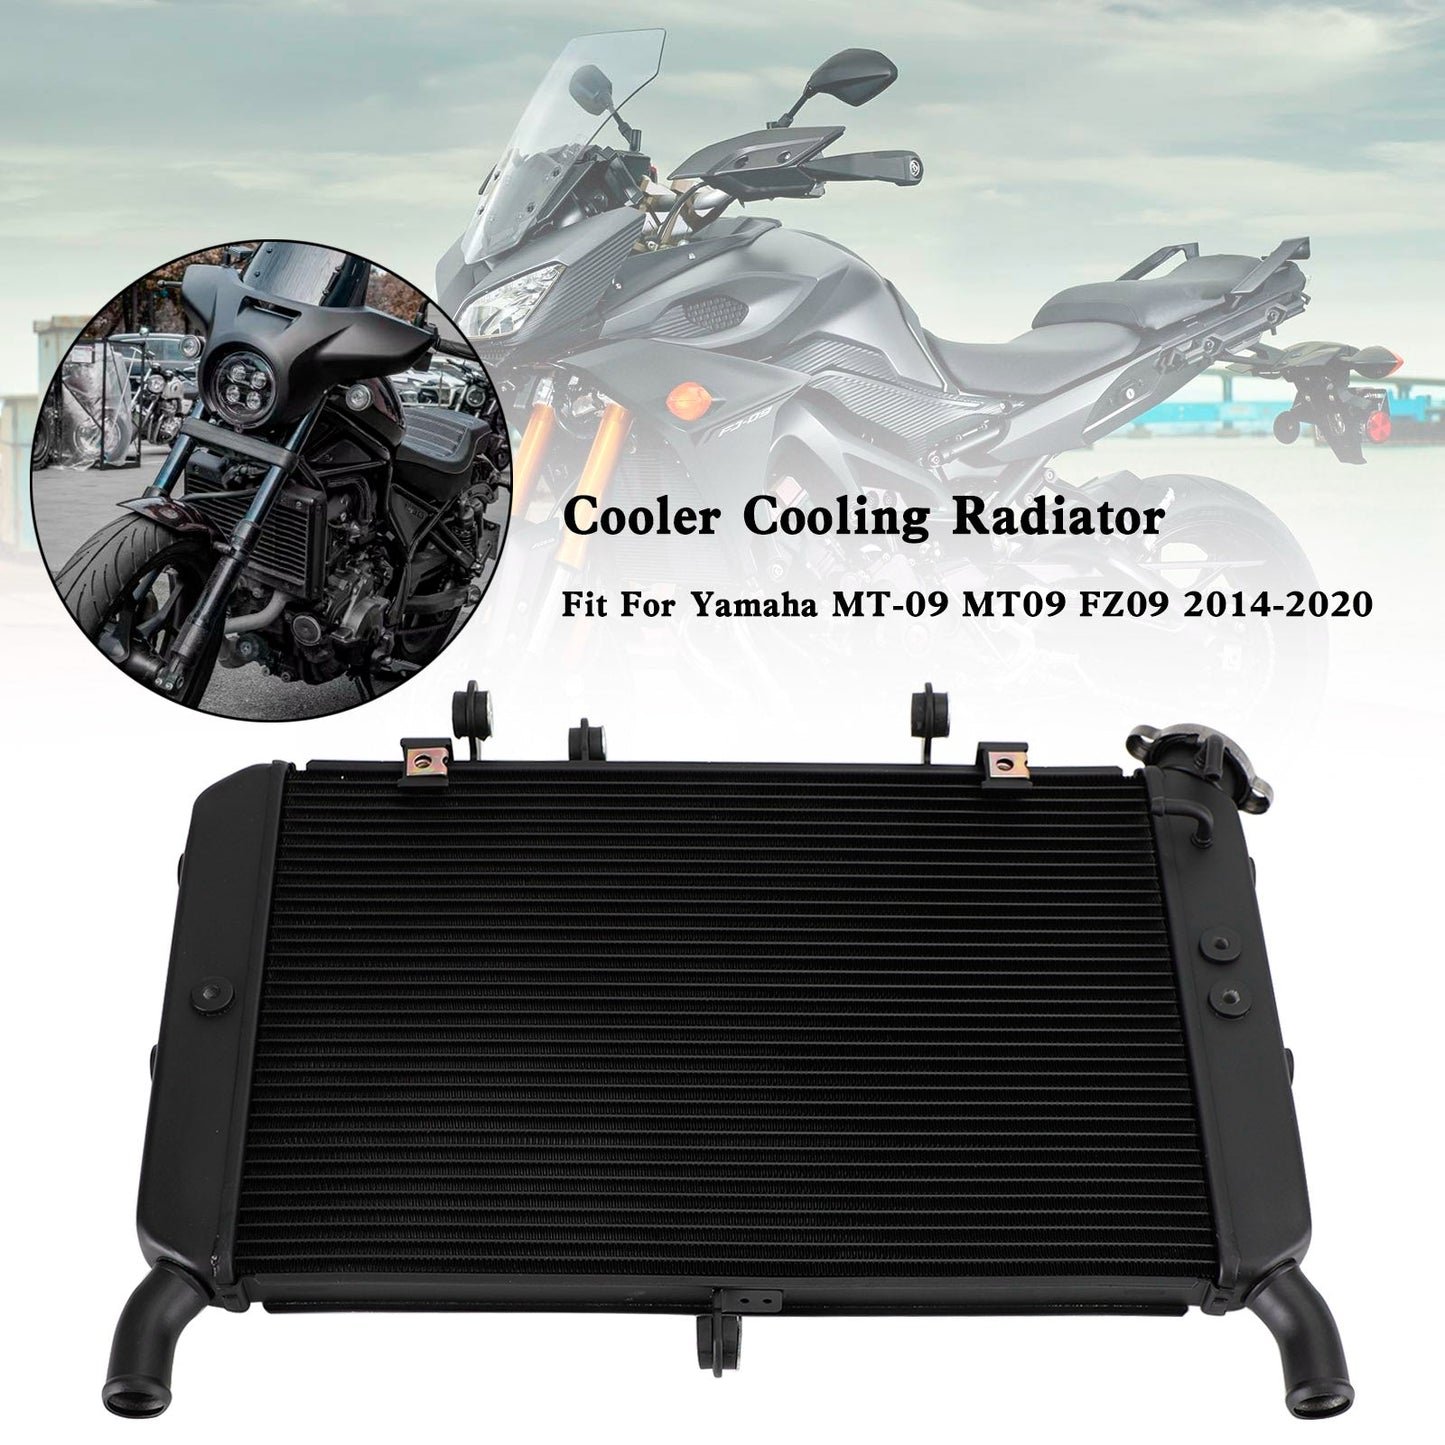 Yamaha FJ09 2015-2017 Radiator Cooler Cooling